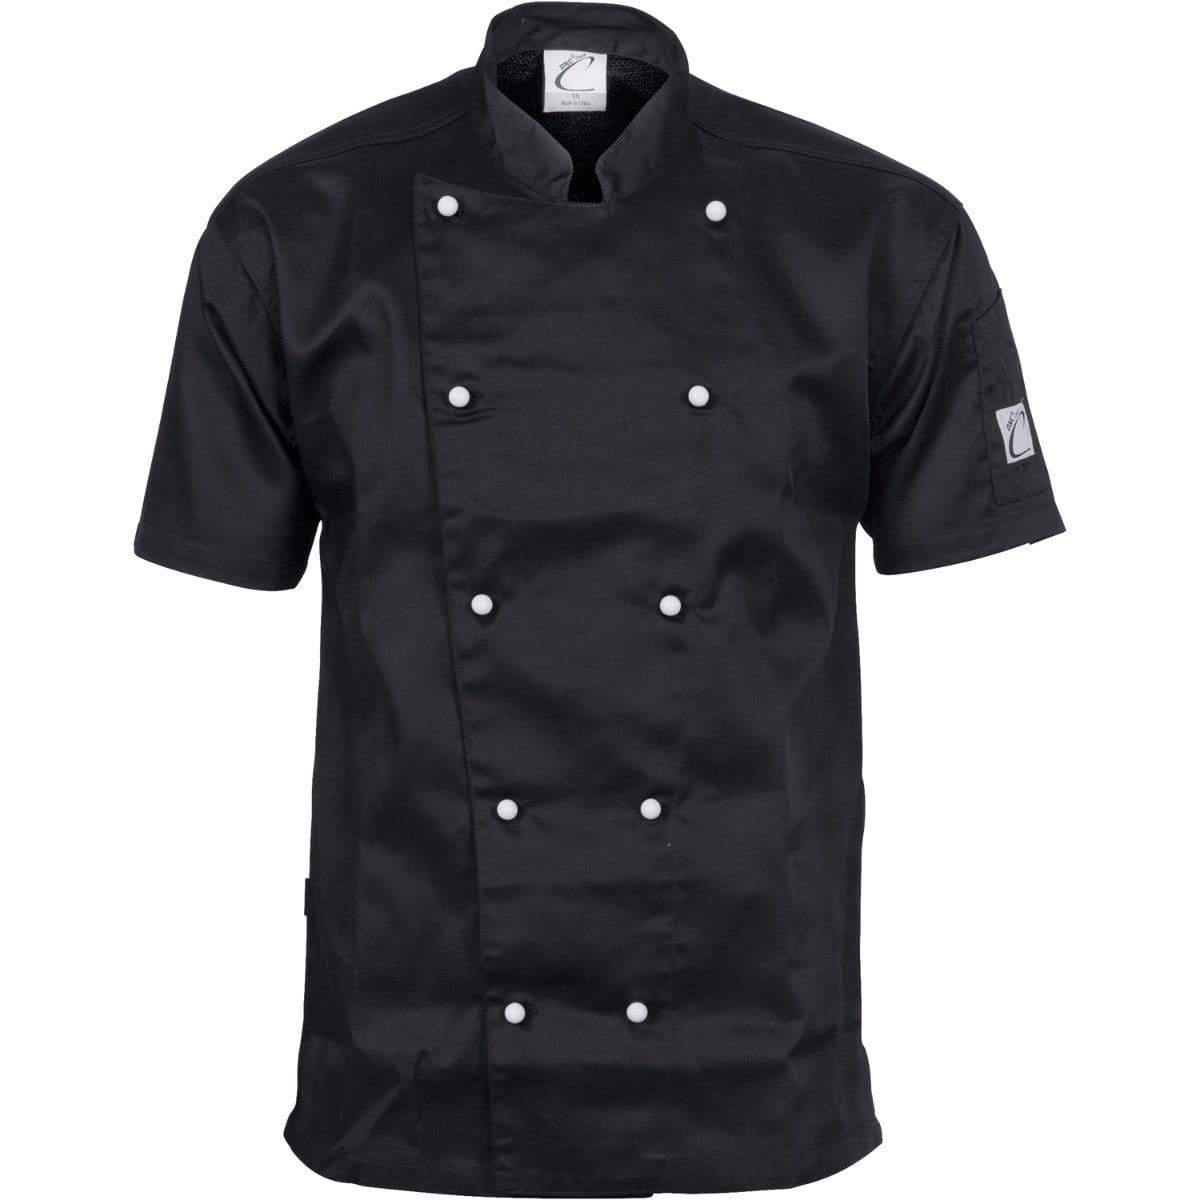 DNC Workwear Hospitality & Chefwear DNC WORKWEAR Traditional Short Sleeve Chef Jacket 1101